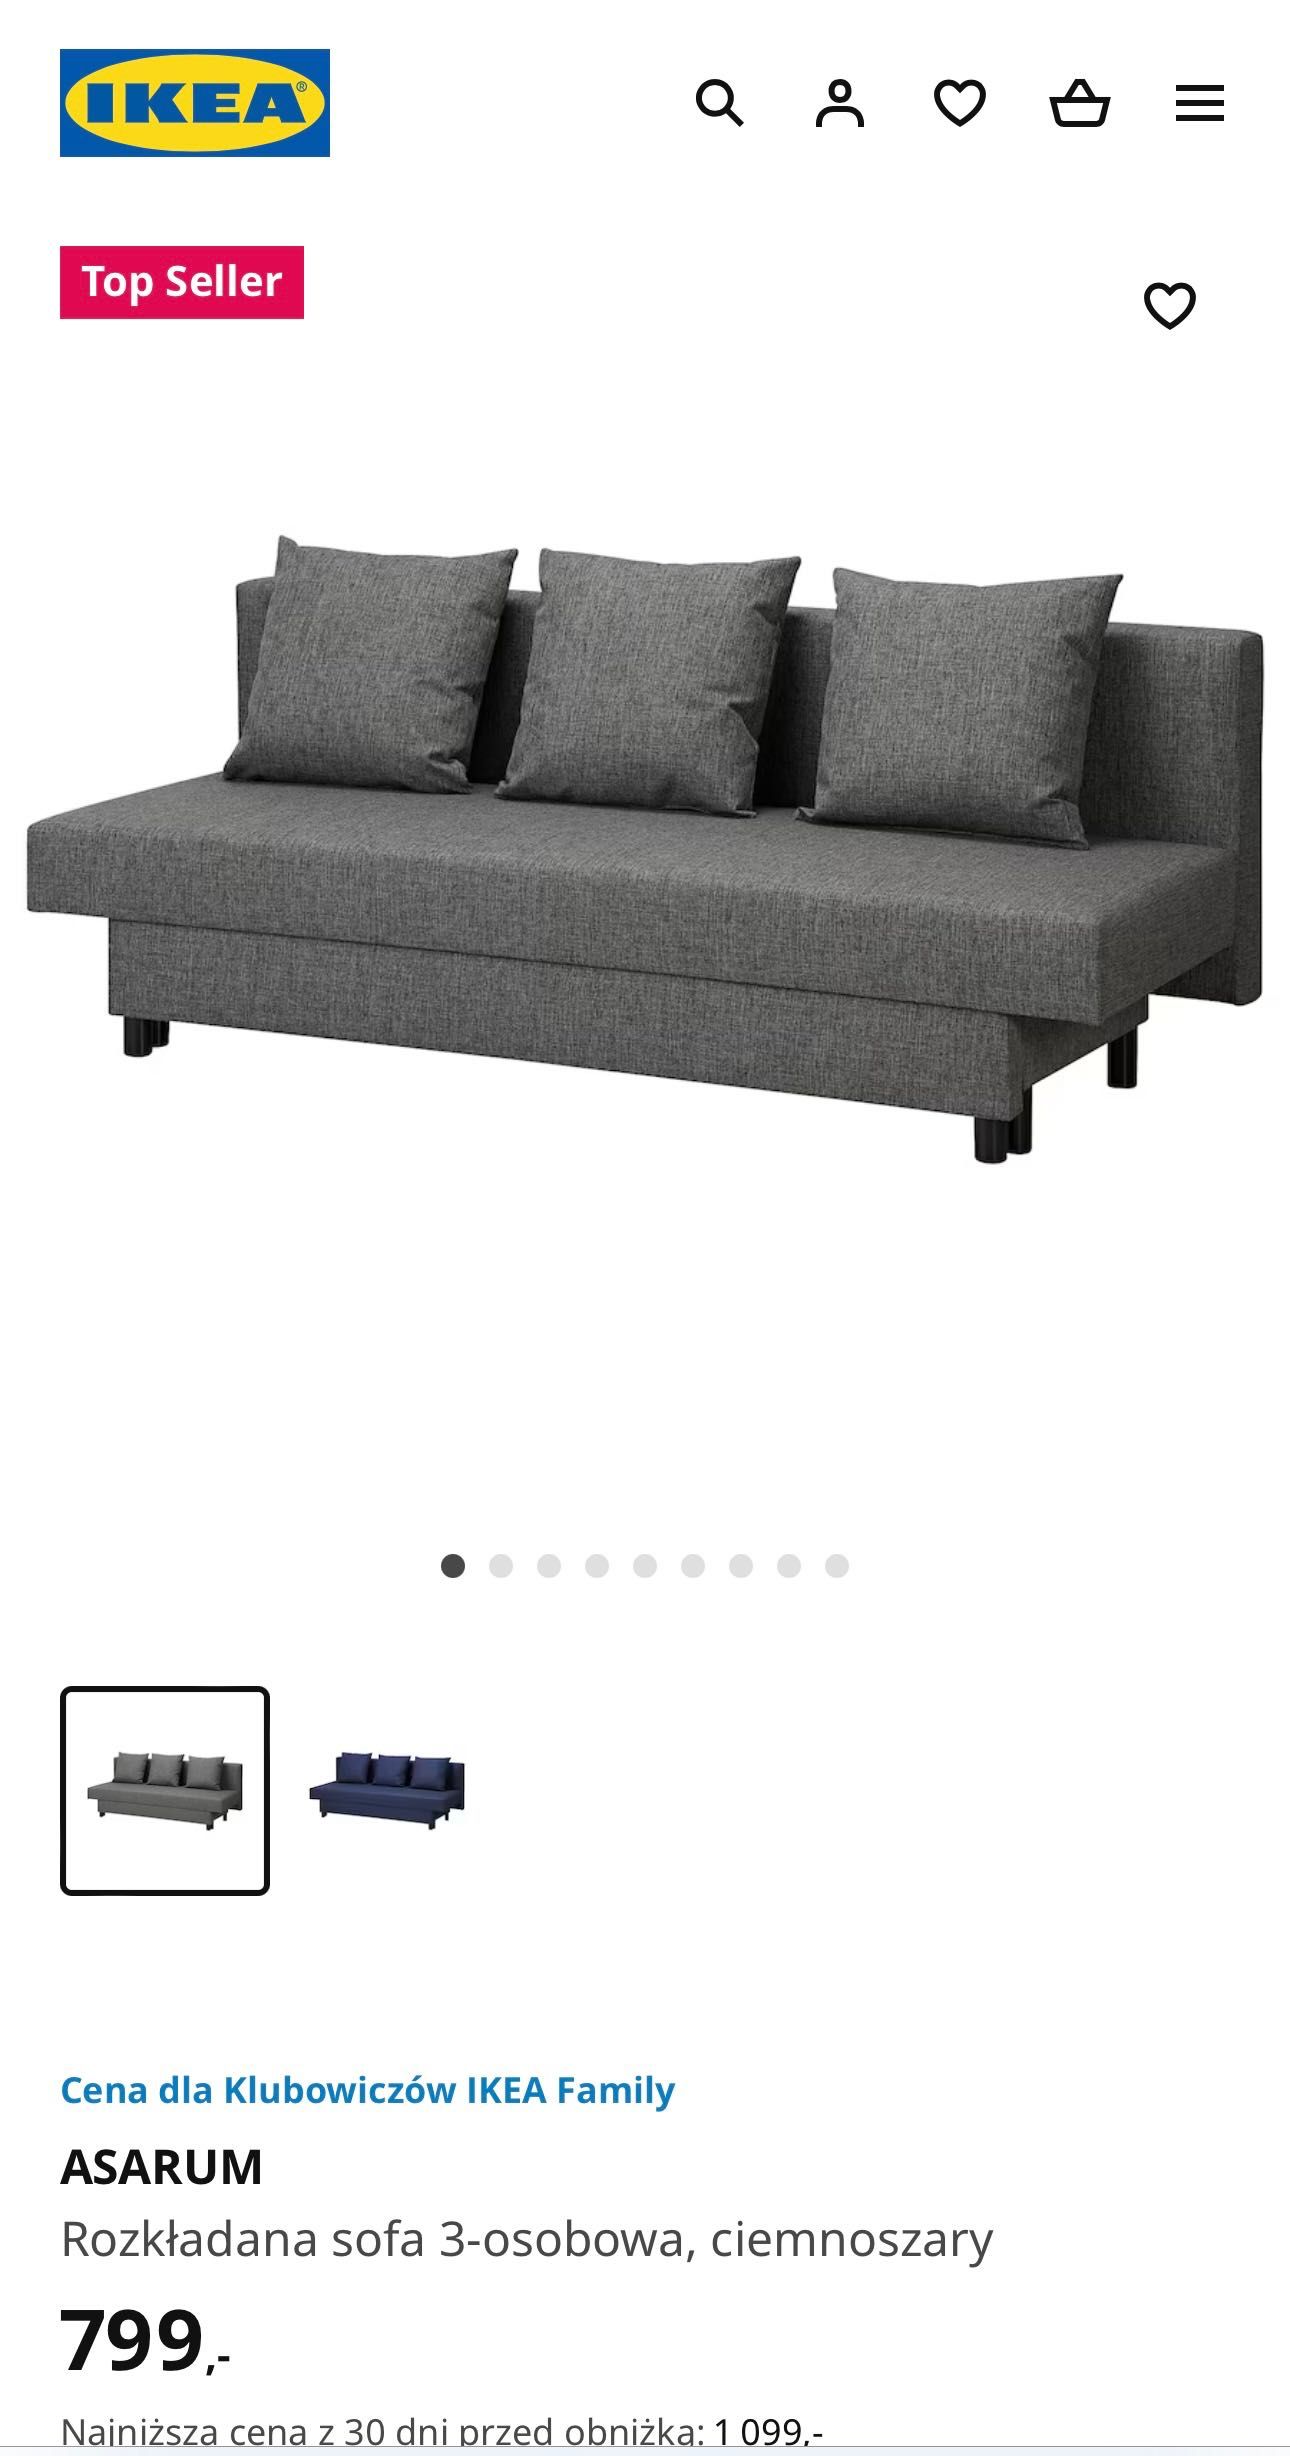 sofę IKEA Asarum